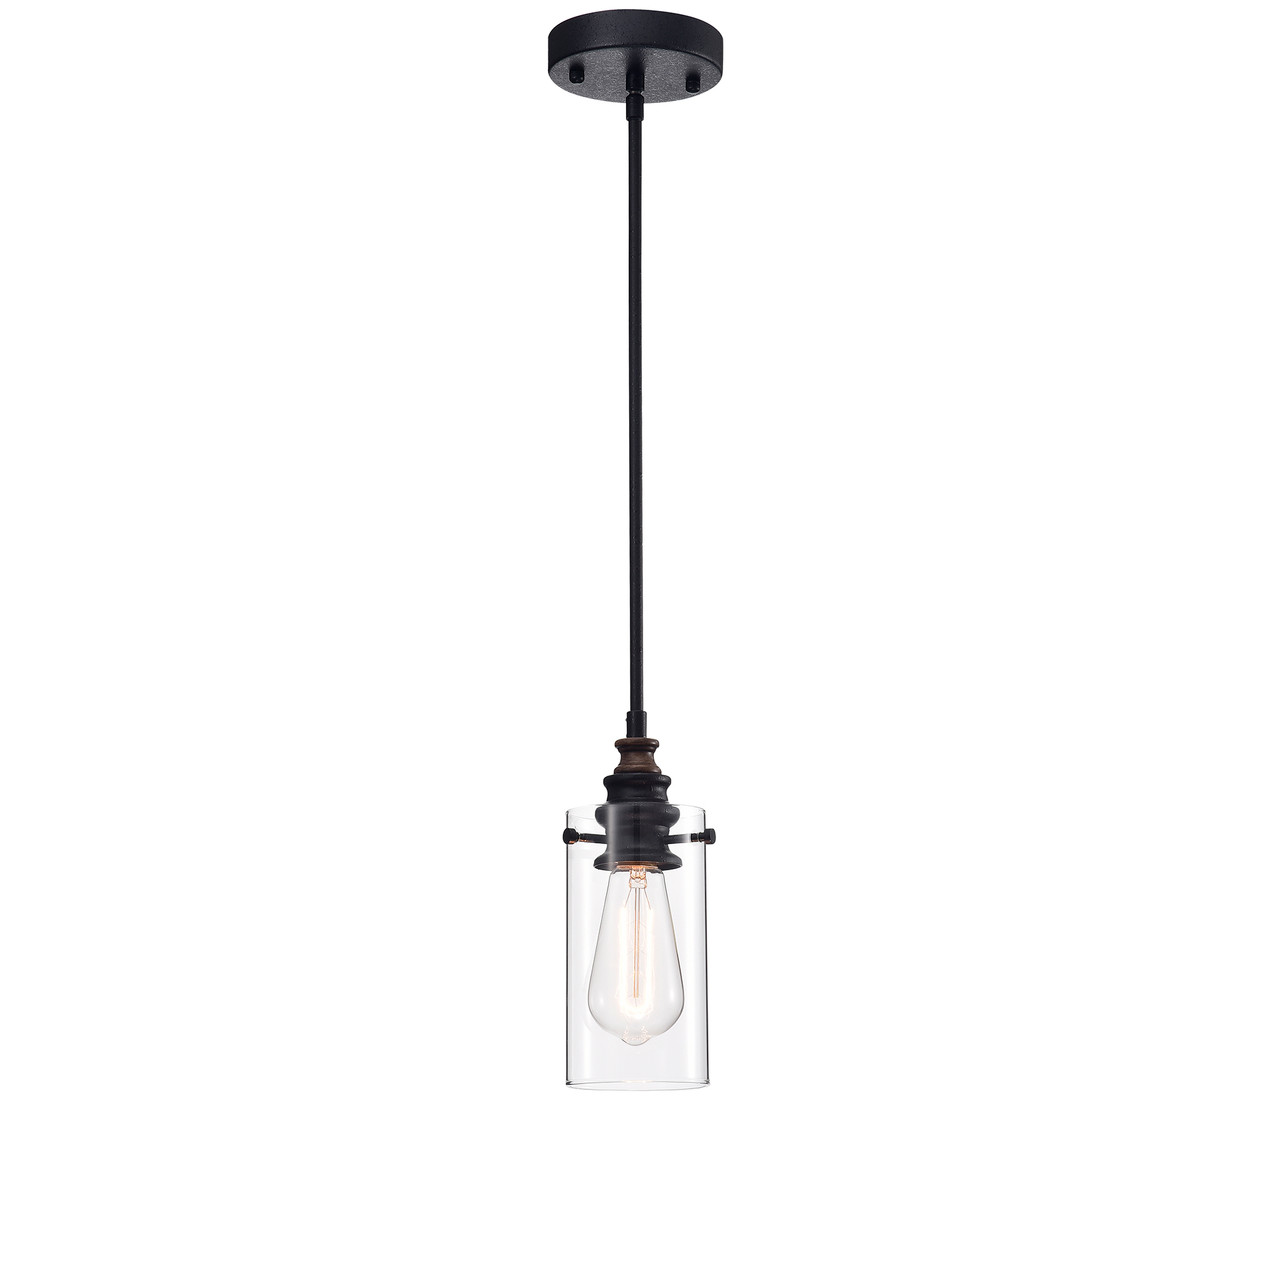 WAREHOUSE OF TIFFANY'S HM065/1 Tedosha 4 in. 1-Light Indoor Black Finish Pendant Lamp with Light Kit